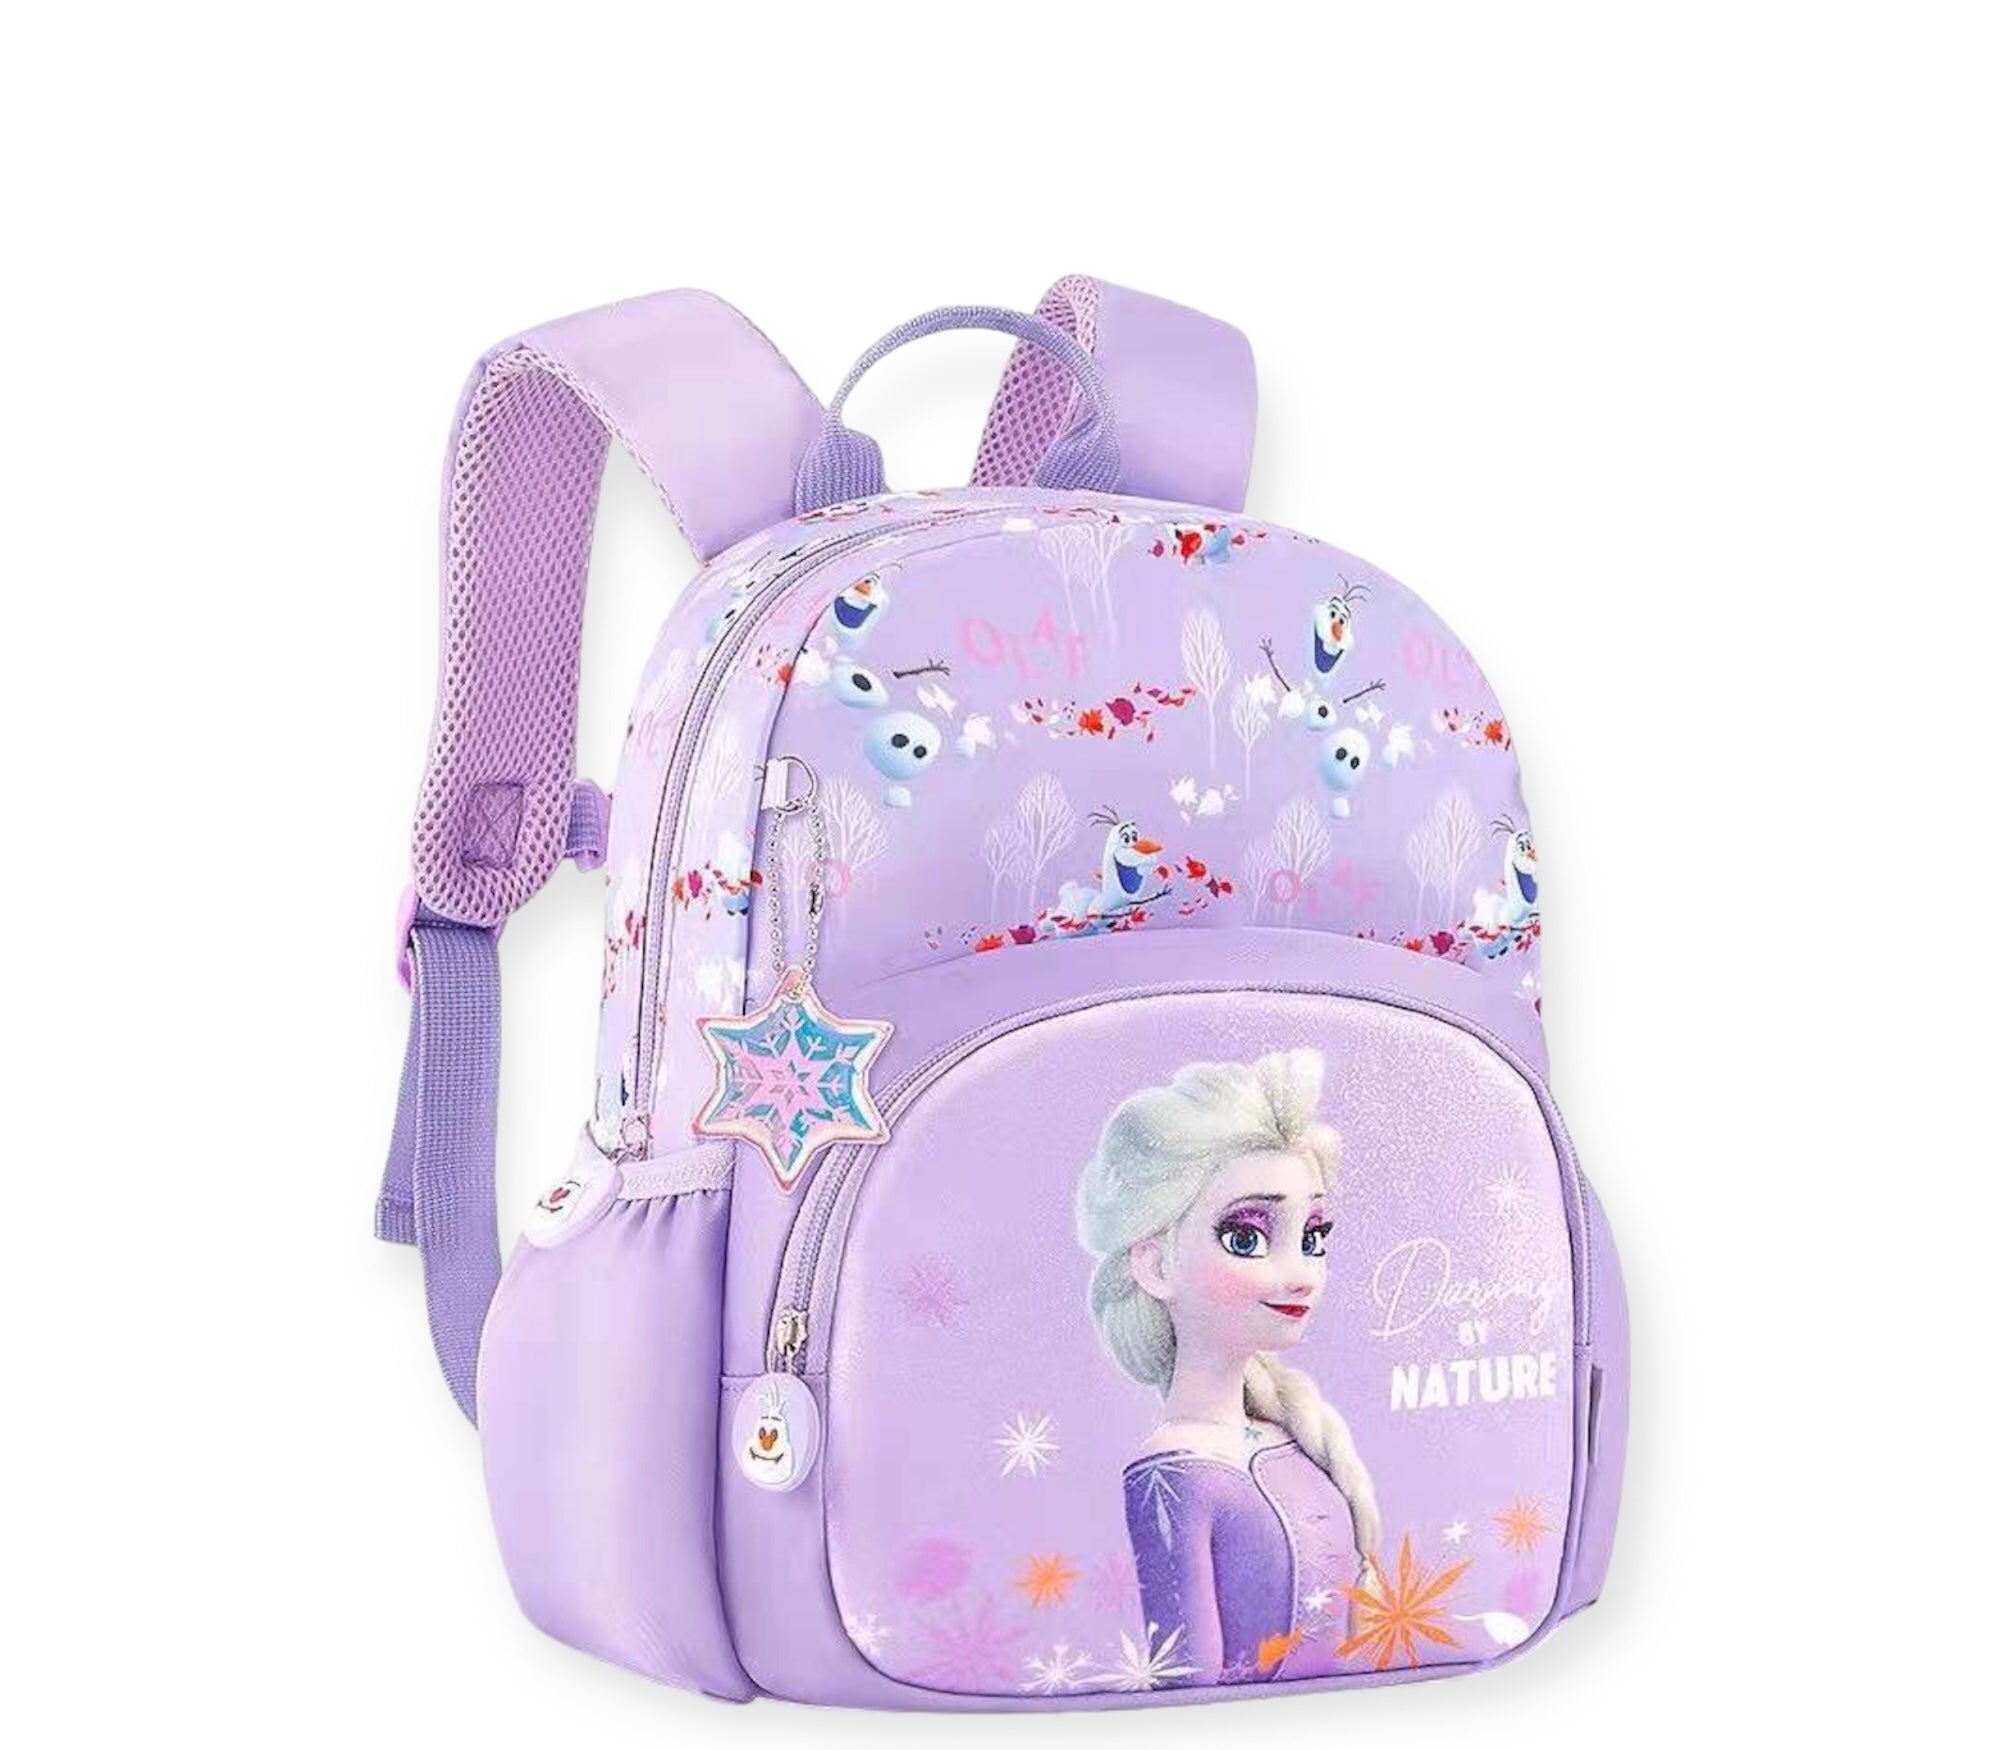 Frozen backpack